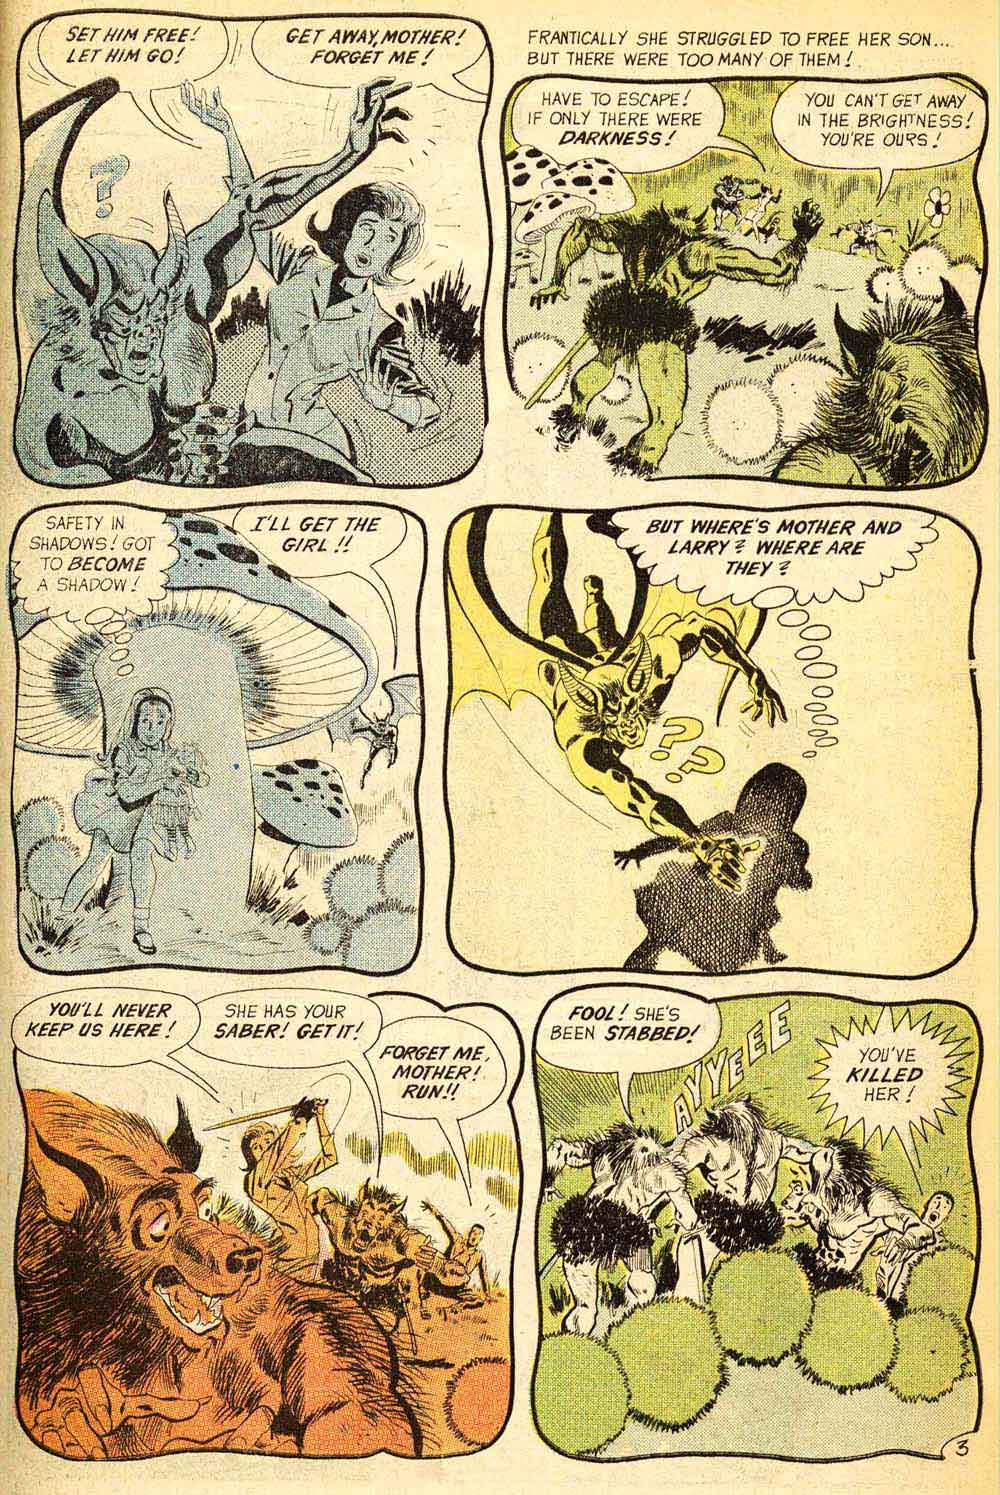 Nightshade's back-up strip from Captain Atom #88 (1967) from Charlton Comics by David Kaler and Jim Aparo